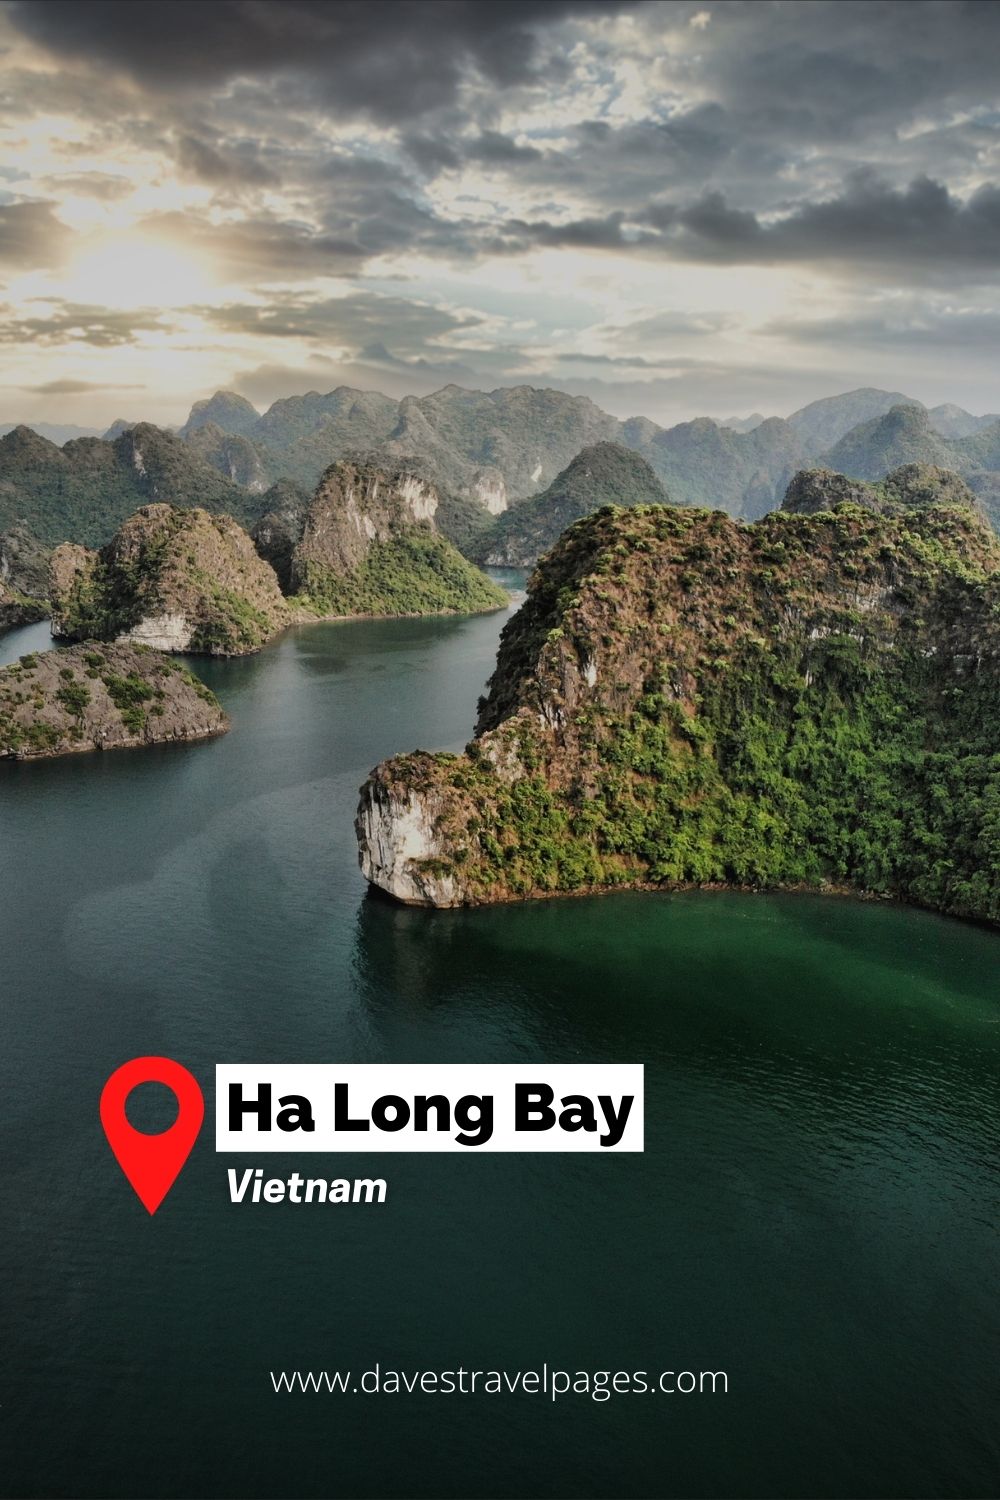 Ha Long Bay is a natural wonder of Asia